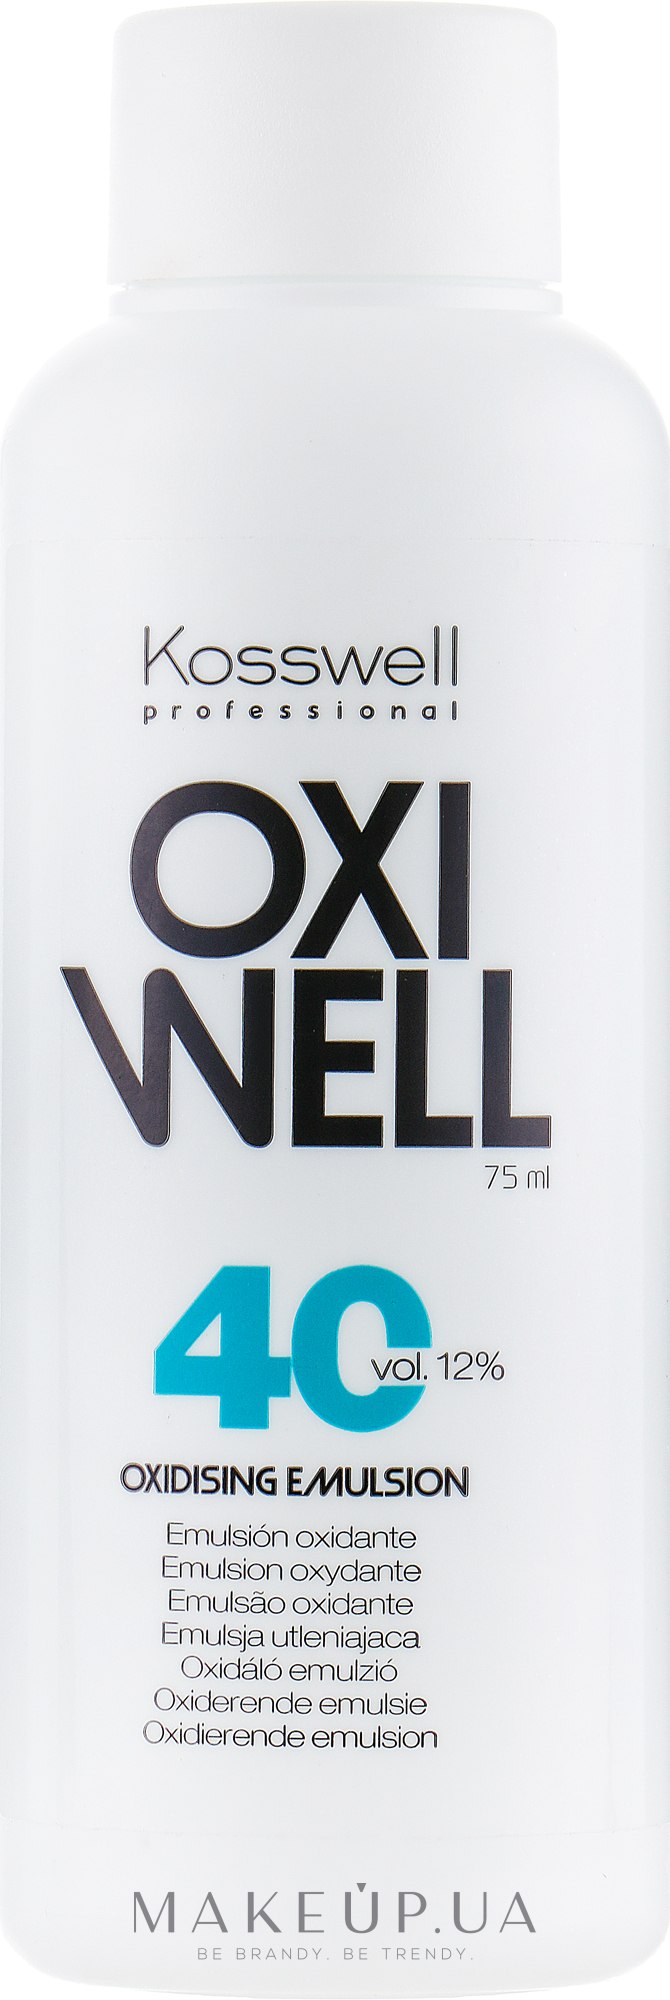 Окислительная эмульсия, 12% - Kosswell Professional Equium Oxidizing Emulsion Oxiwell 12% 40 vol — фото 75ml